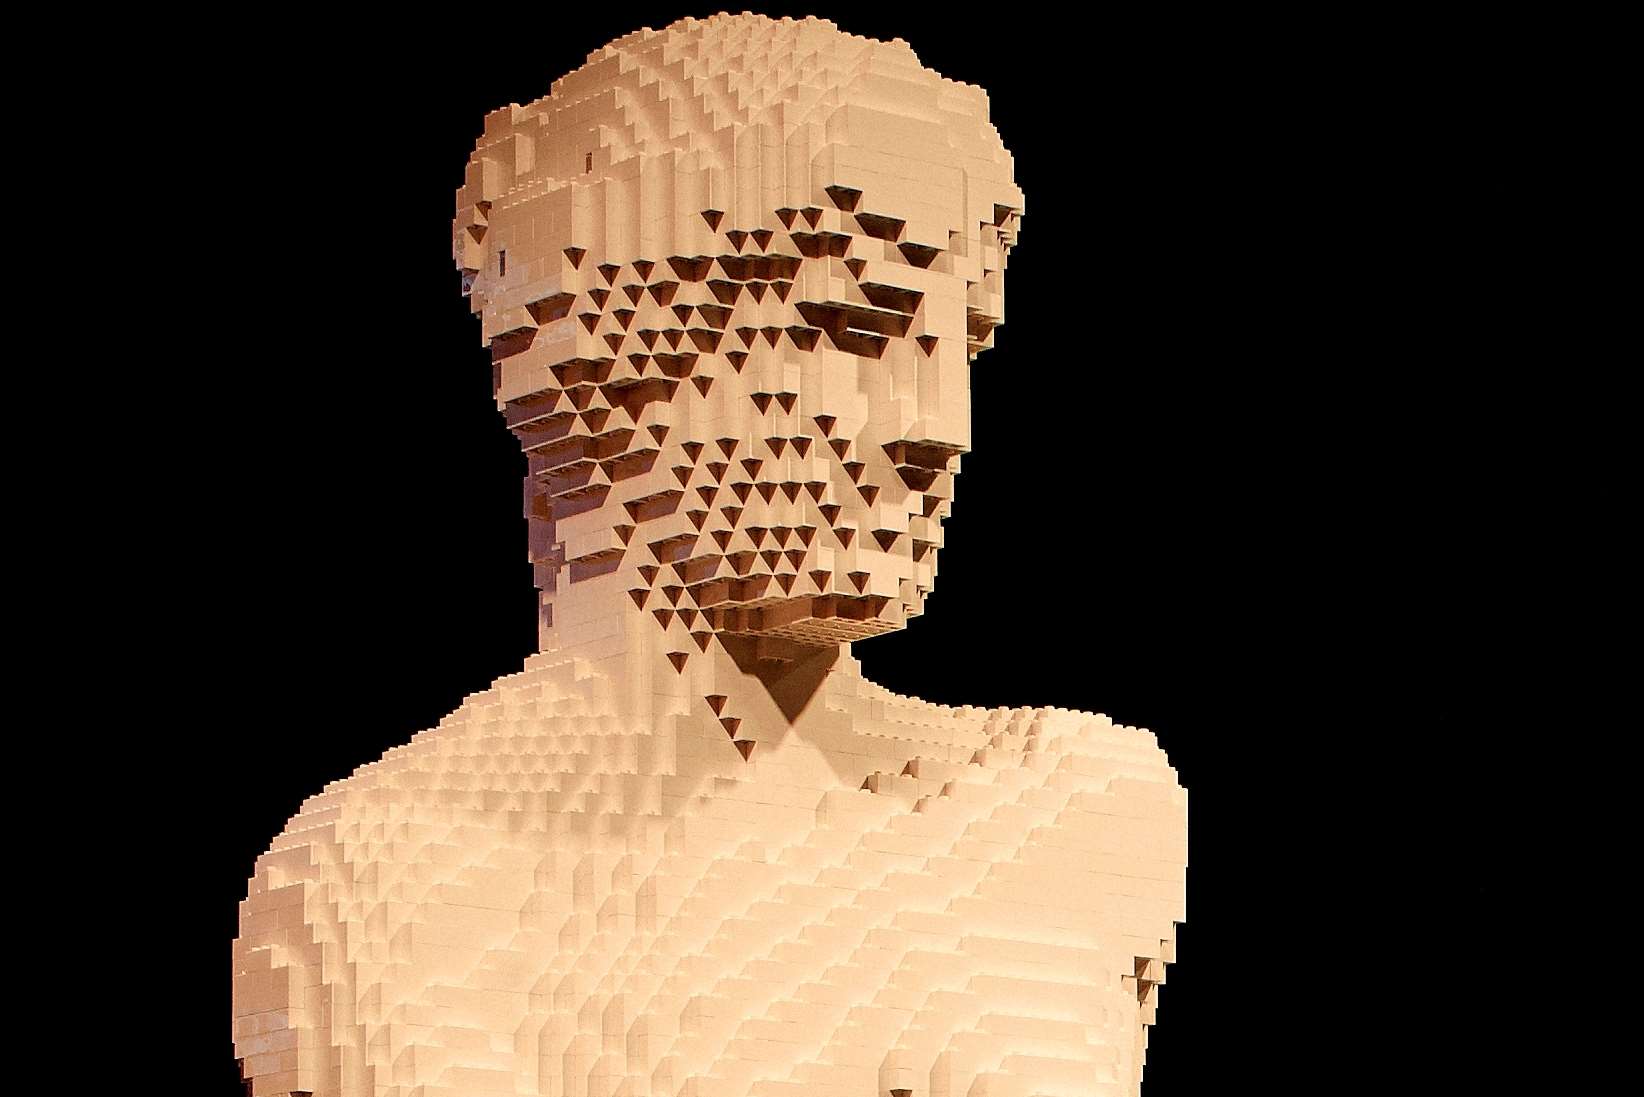 Nathan Sawaya's LEGO version of Venus de Milo